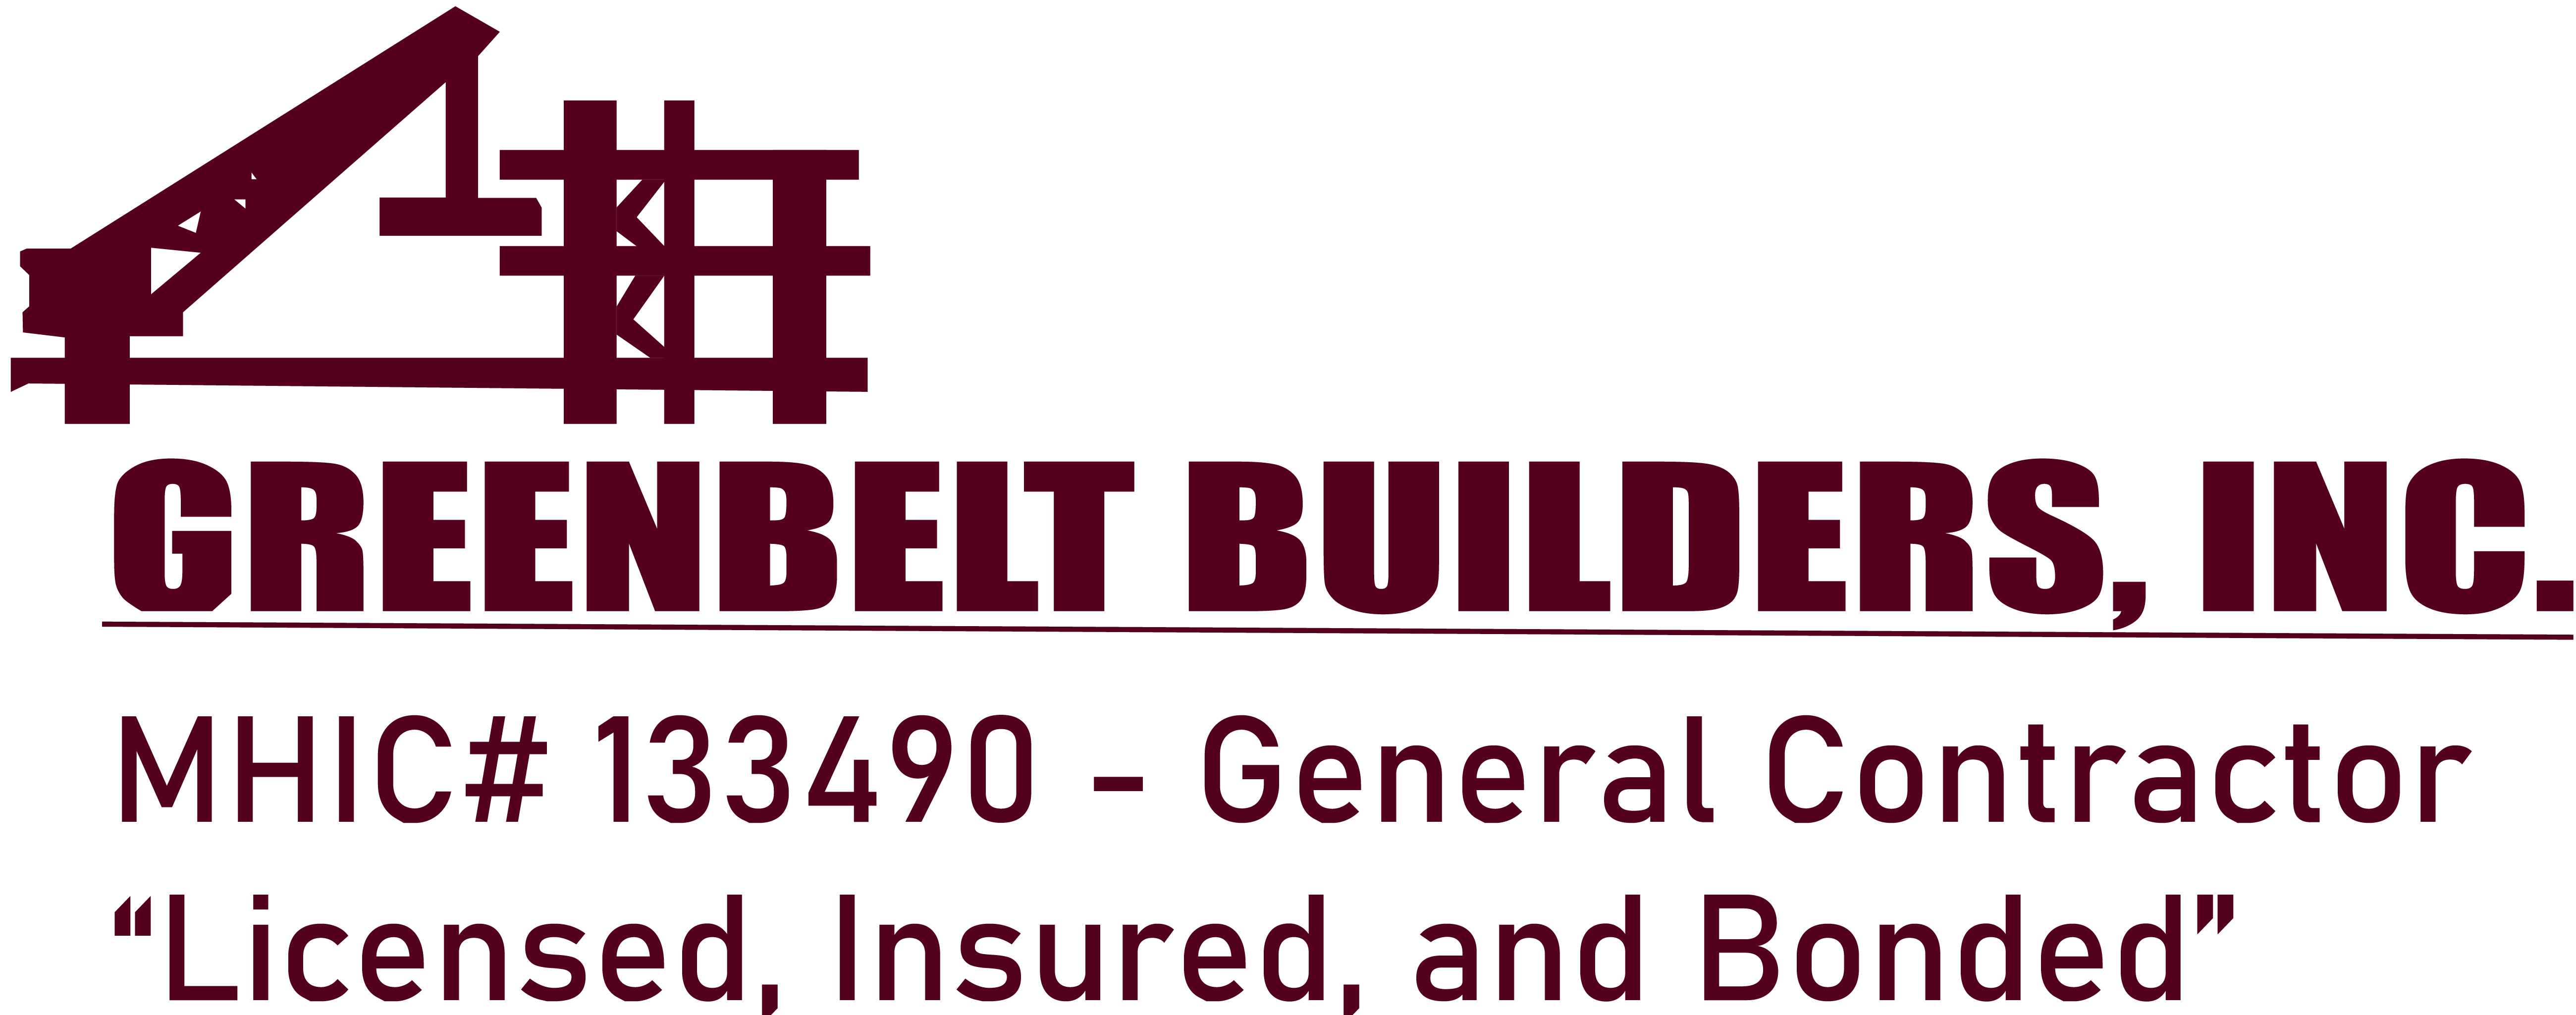 Greenbelt Builders, Inc.